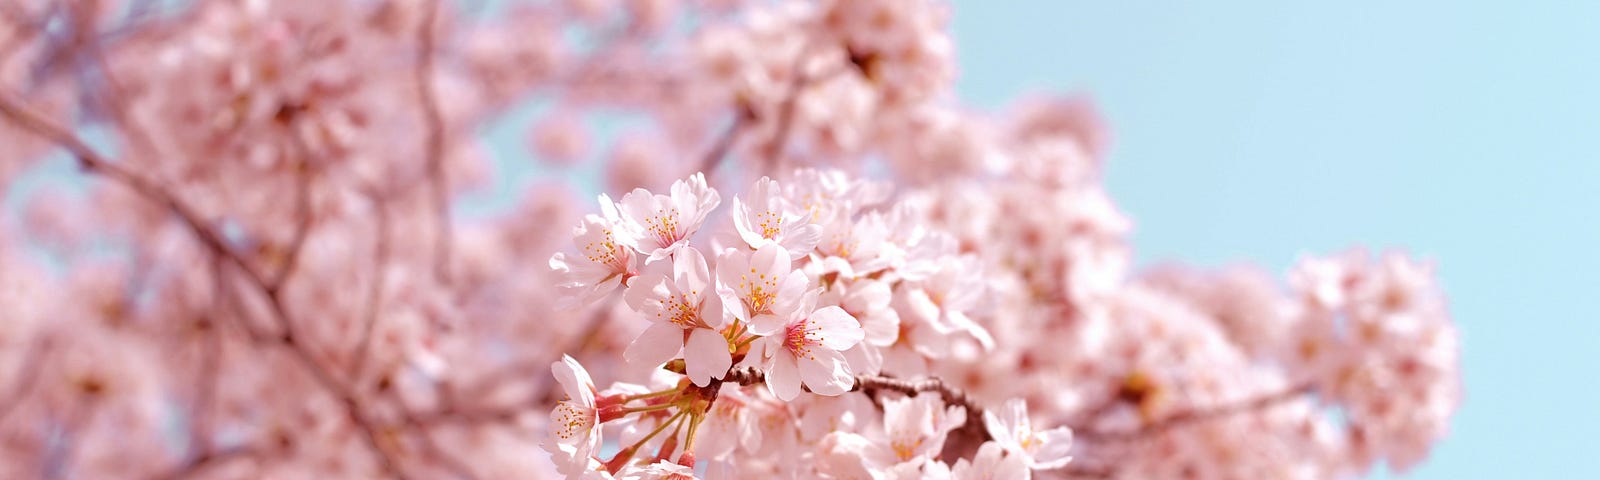 Japanese cherry blossom, also known as sakura